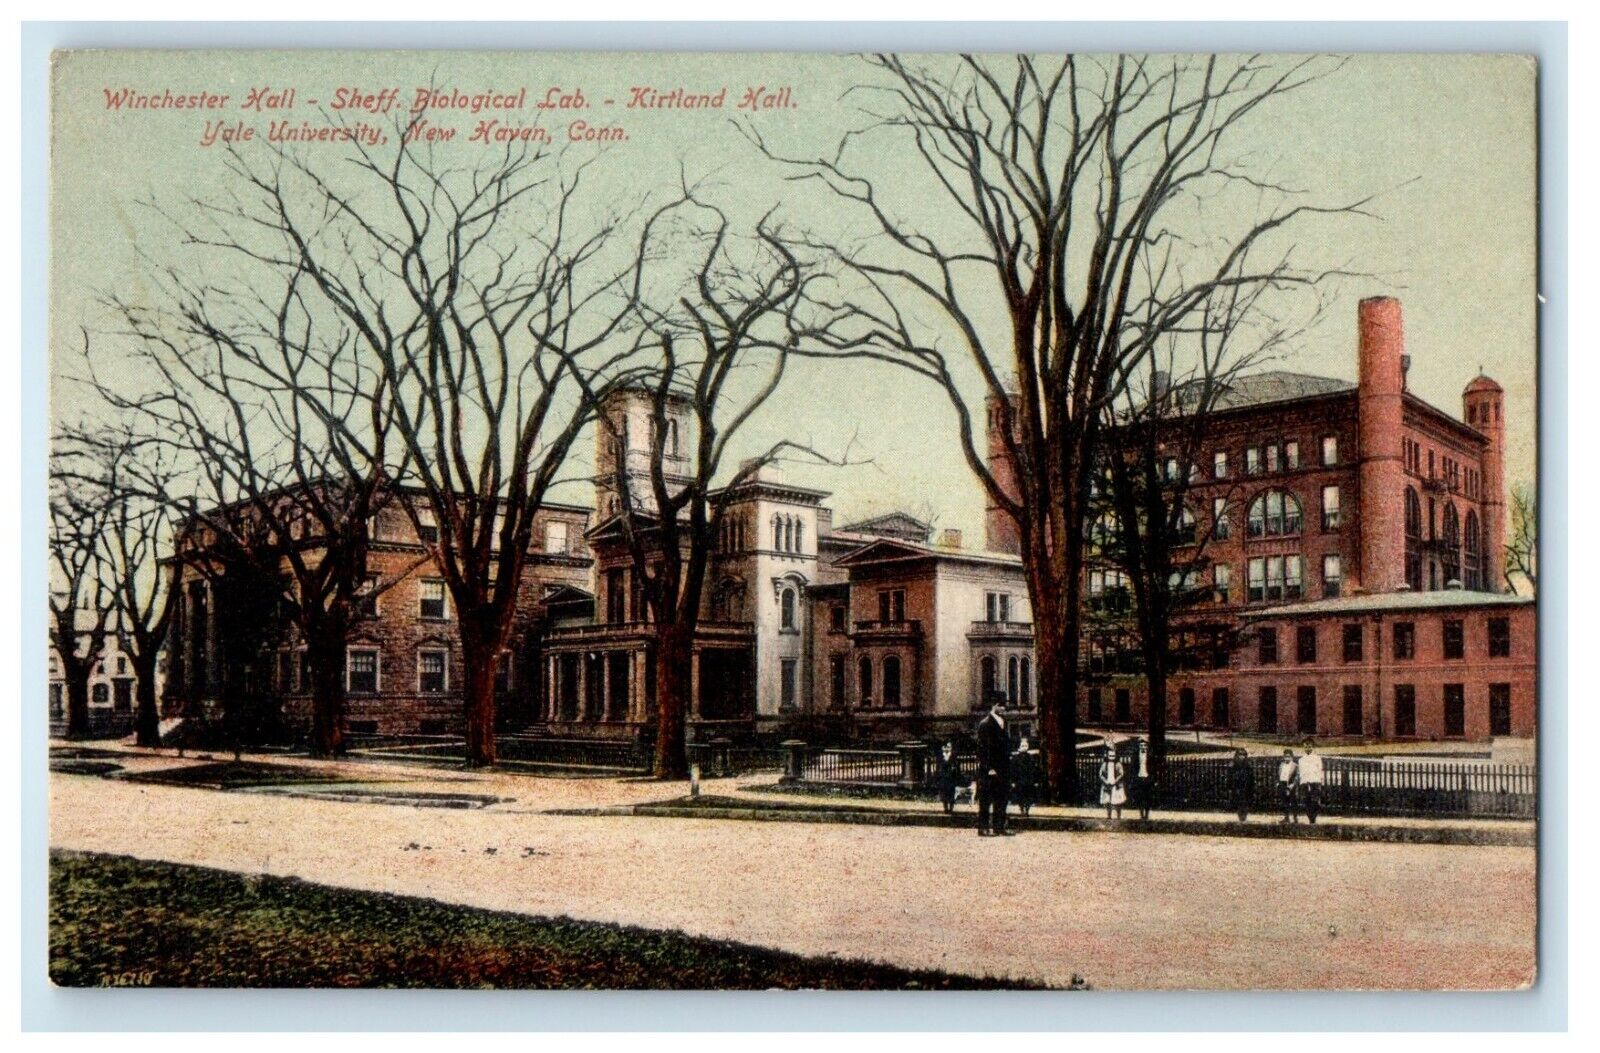 1912 Winchester Hall Sheff Biological Lab Kirtland Hall Yale University Postcard